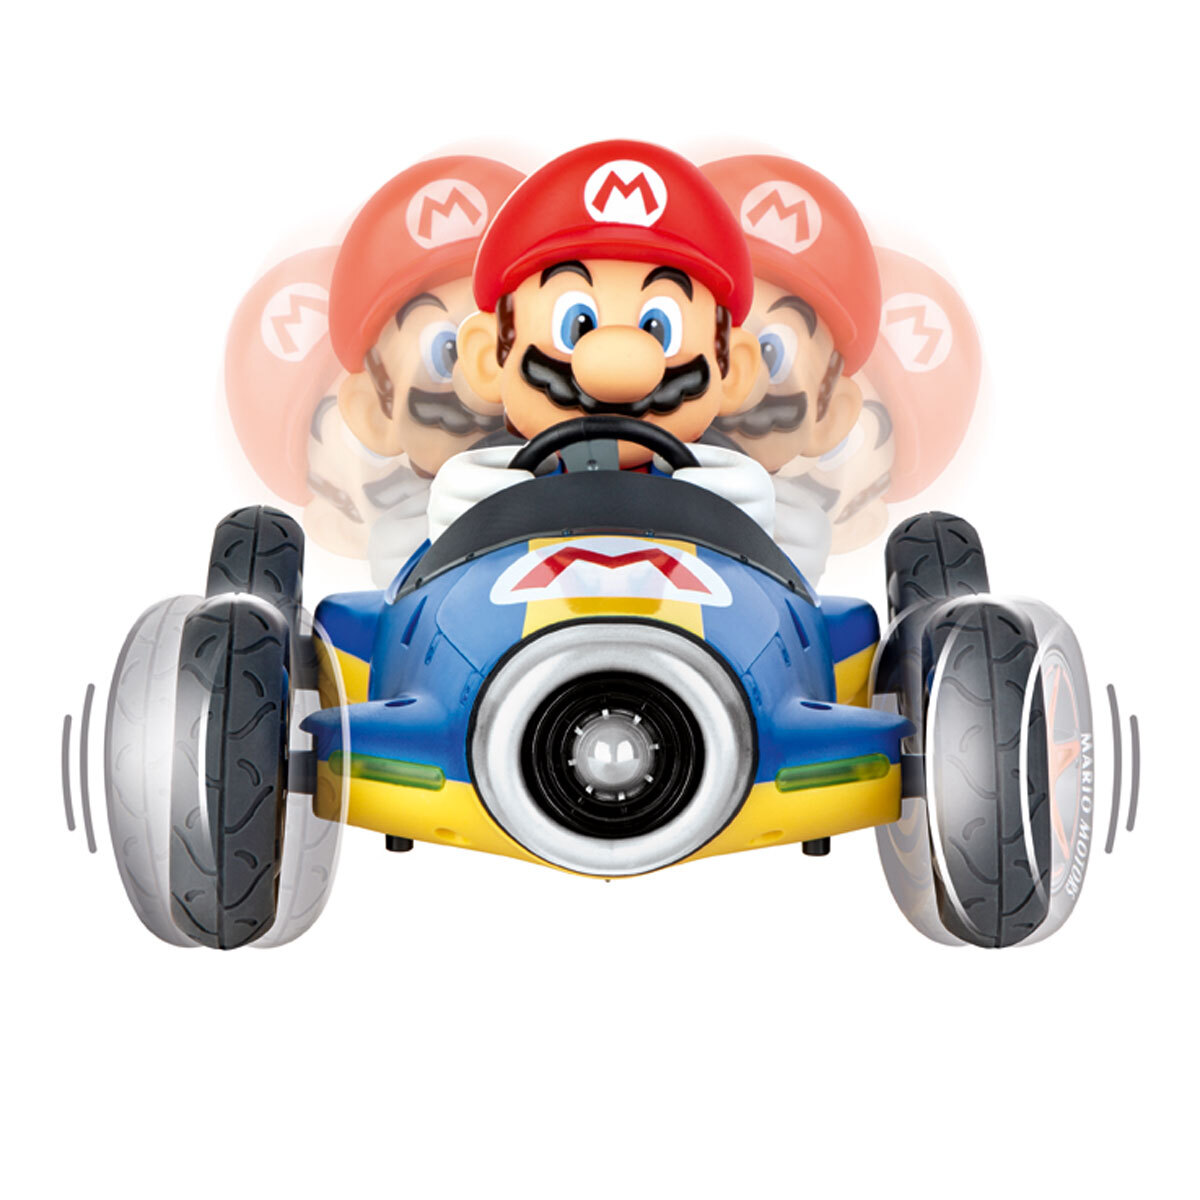 Nintendo Mario Kart™ Mario Remote Control Racer Car With Body Tilting Action (6+ Years)